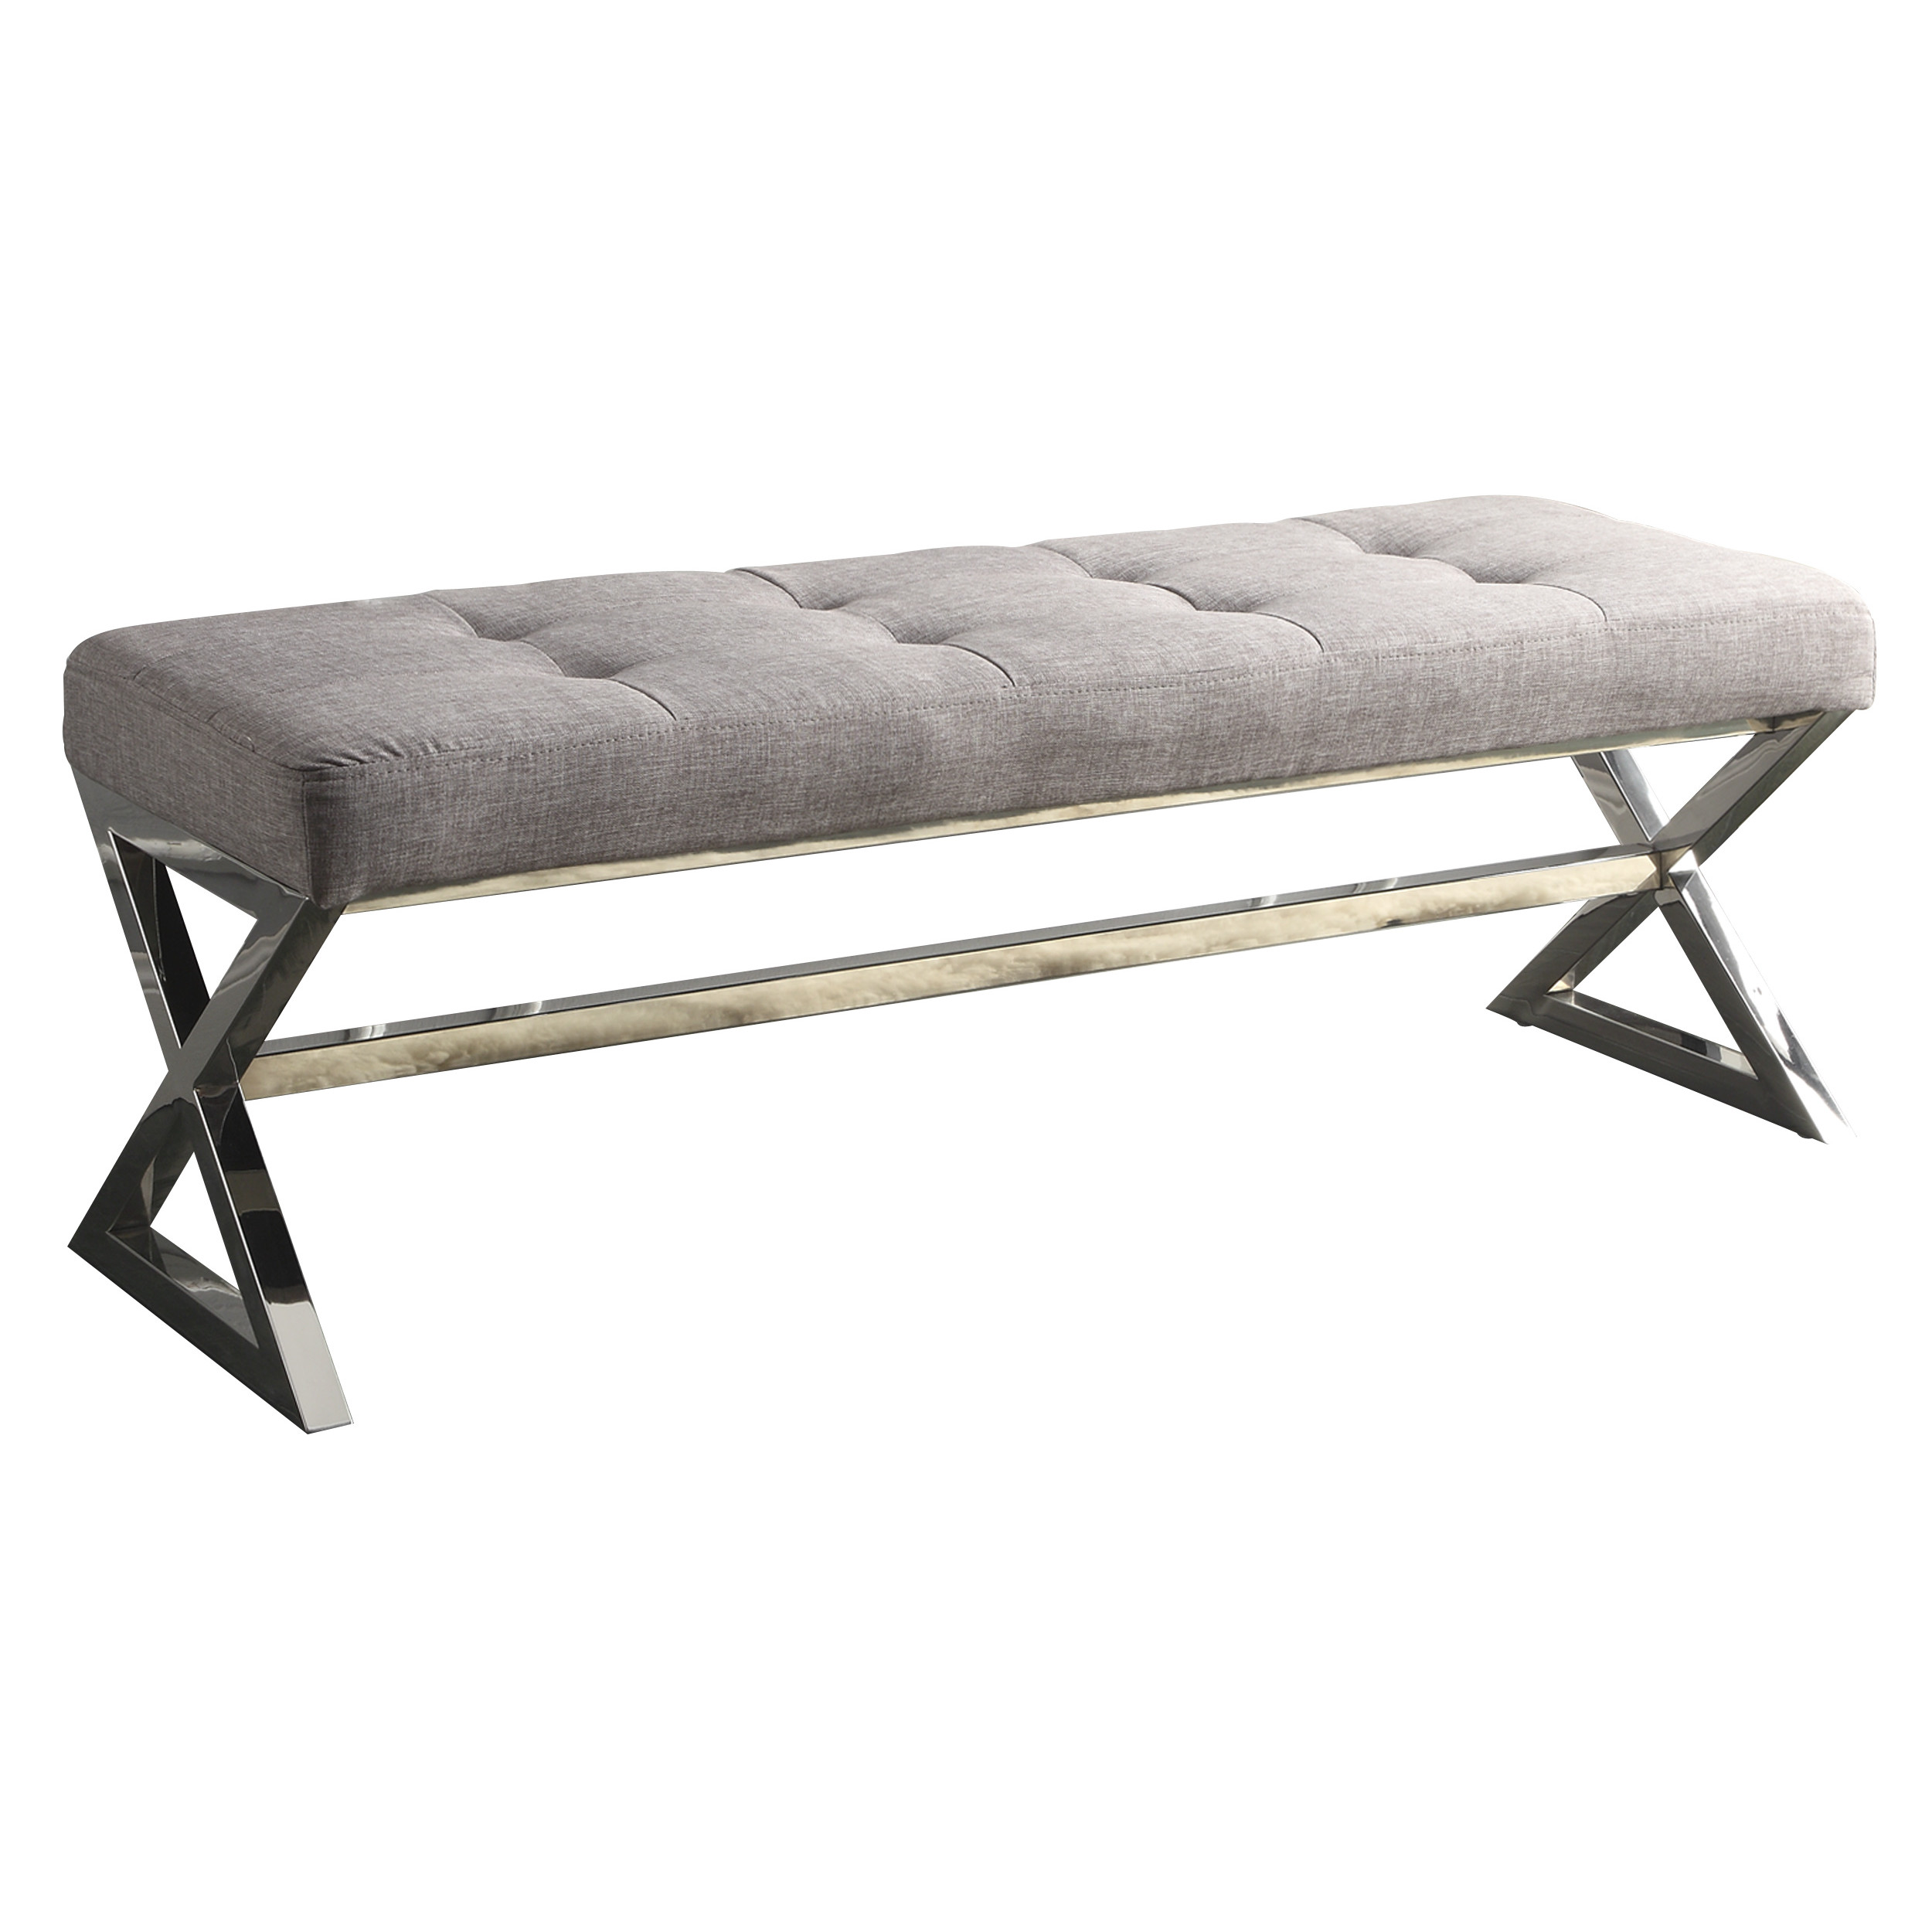 Bench Design: Bench Design Diy Bedroom Gray End Of Chairs Metal ...